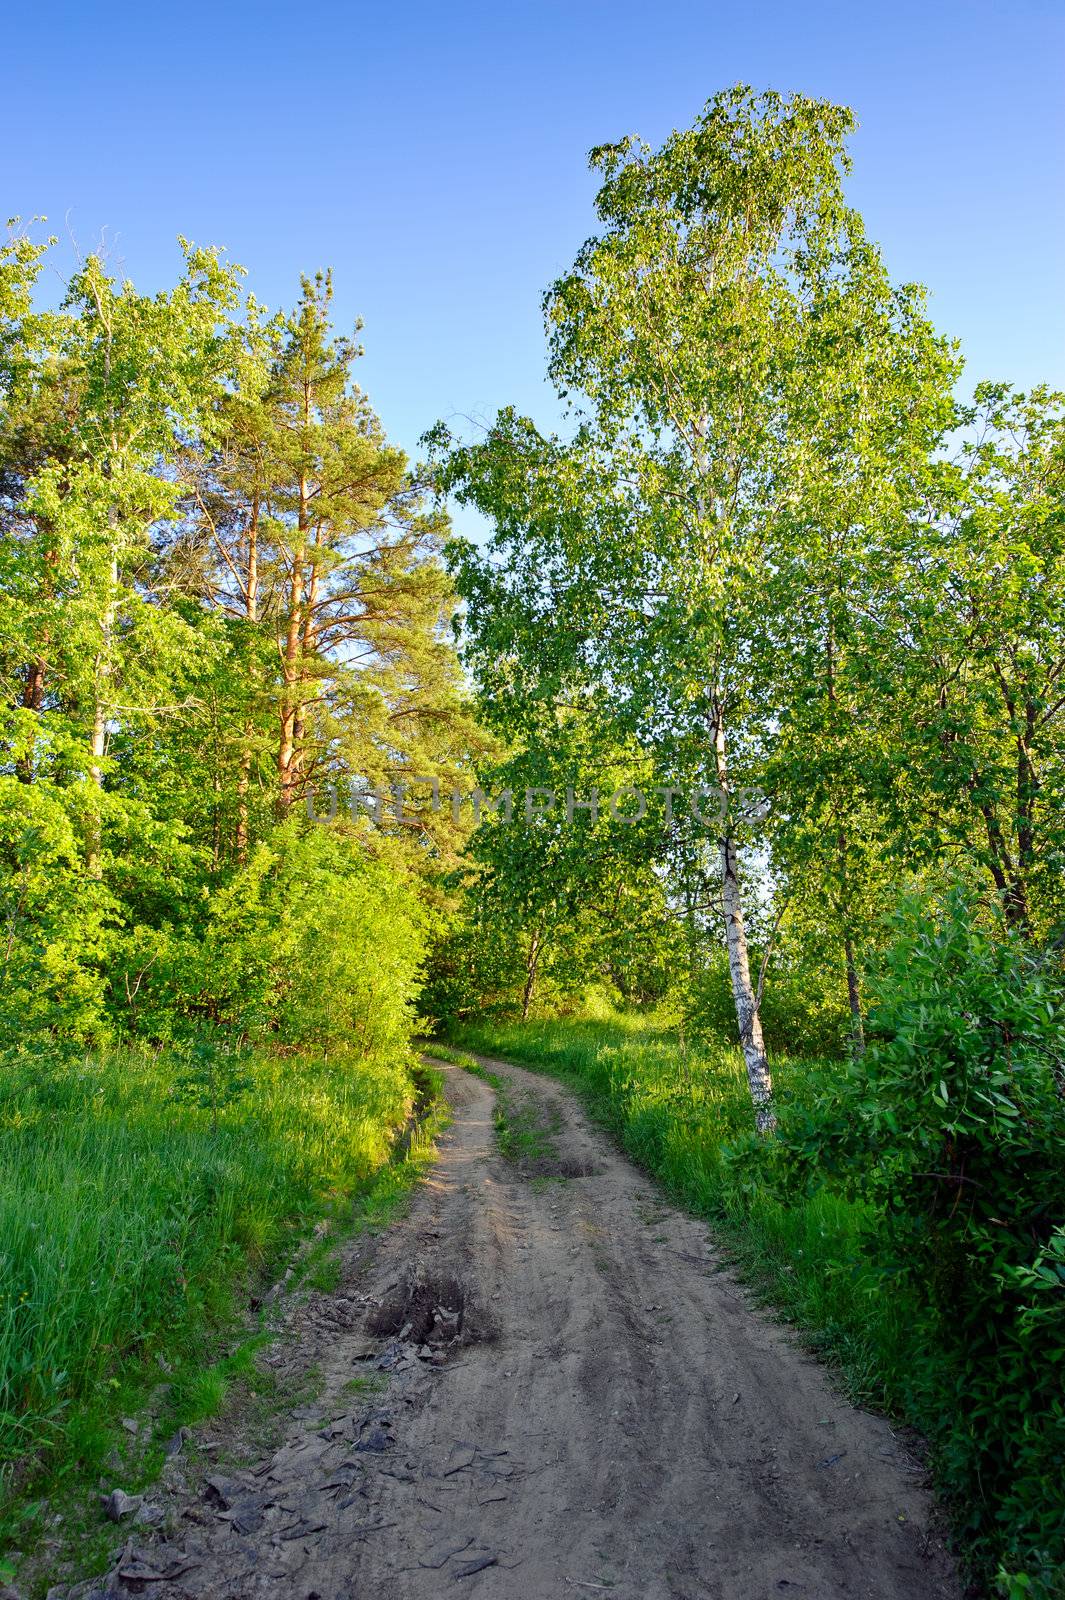 Rural road through summer forest